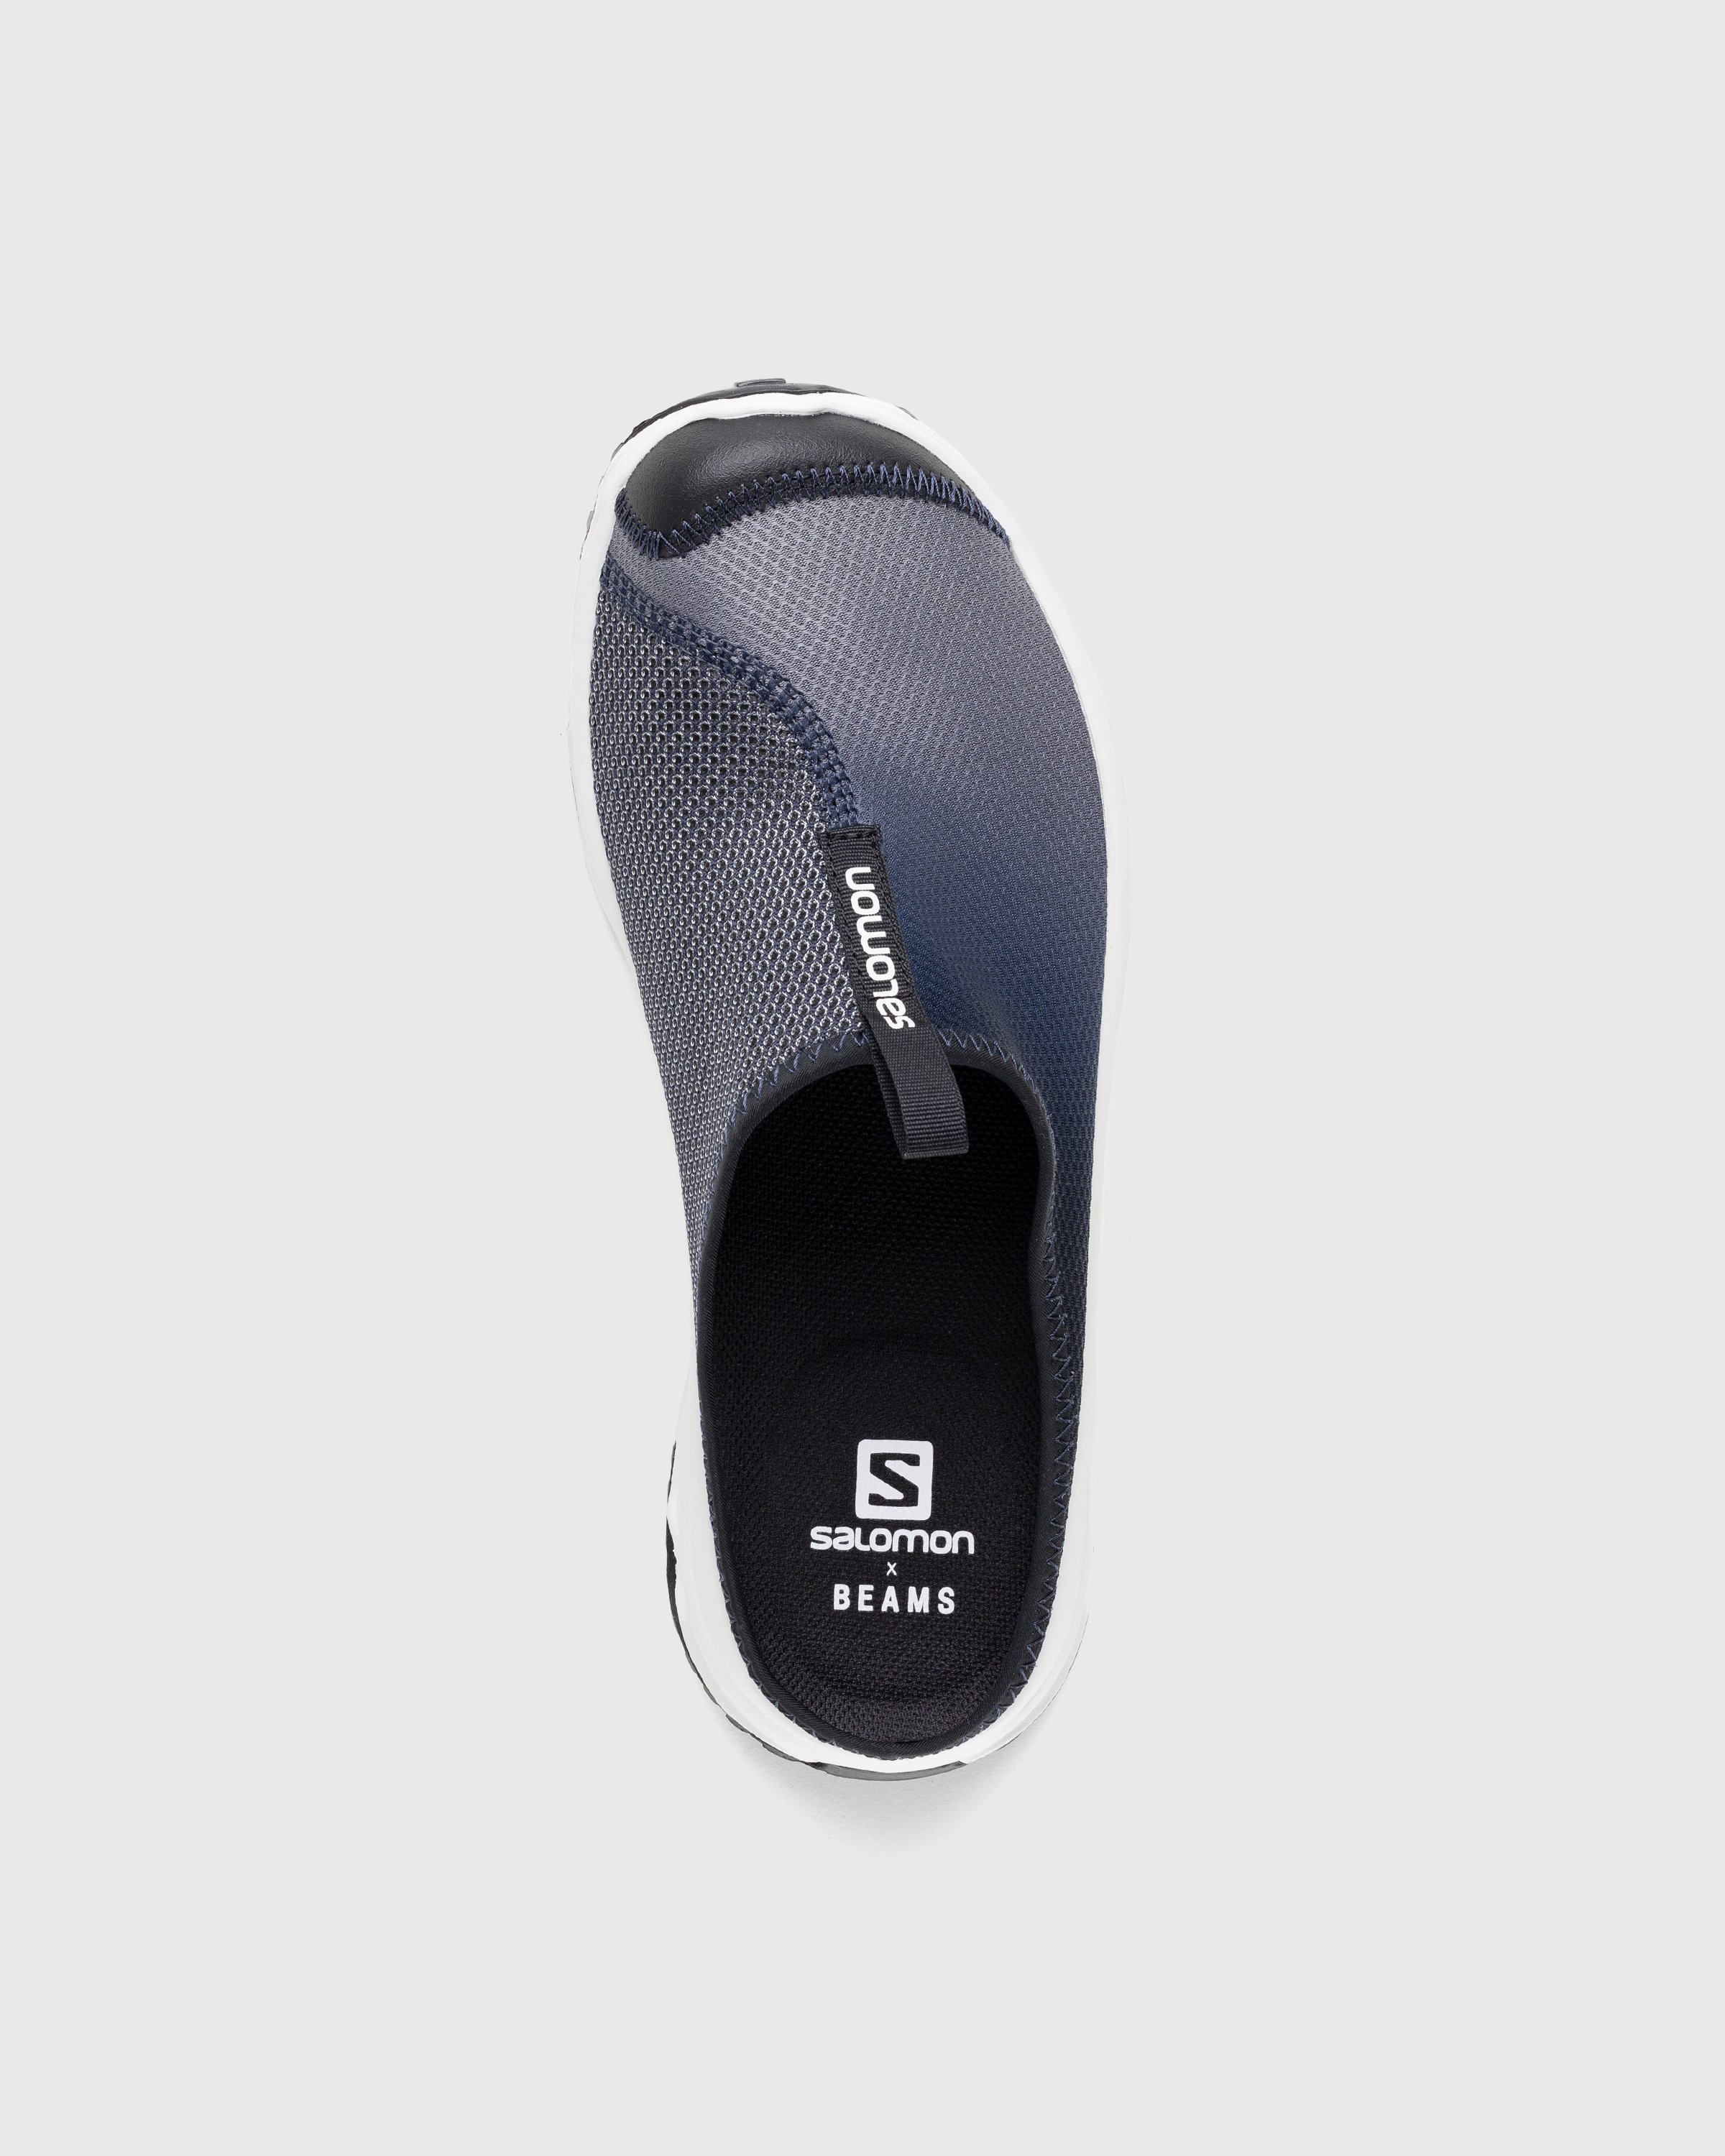 Salomon x Beams - RX Slide 3.0 Quiet Shade/Night Sky/Black - Footwear - Blue - Image 5